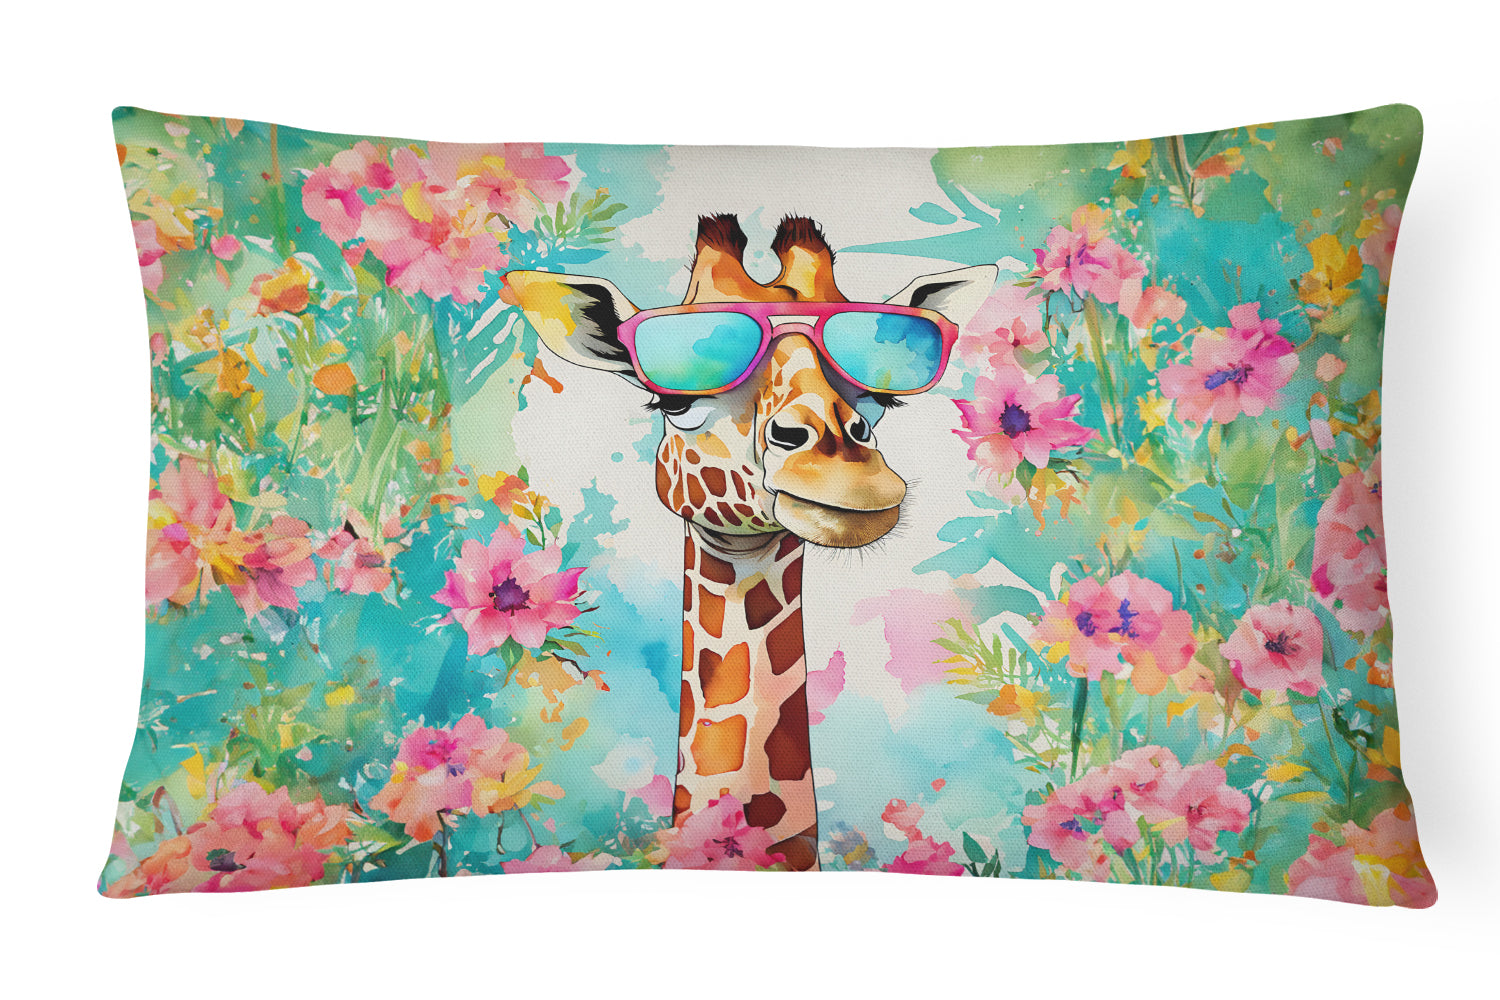 Buy this Hippie Animal Giraffe Throw Pillow